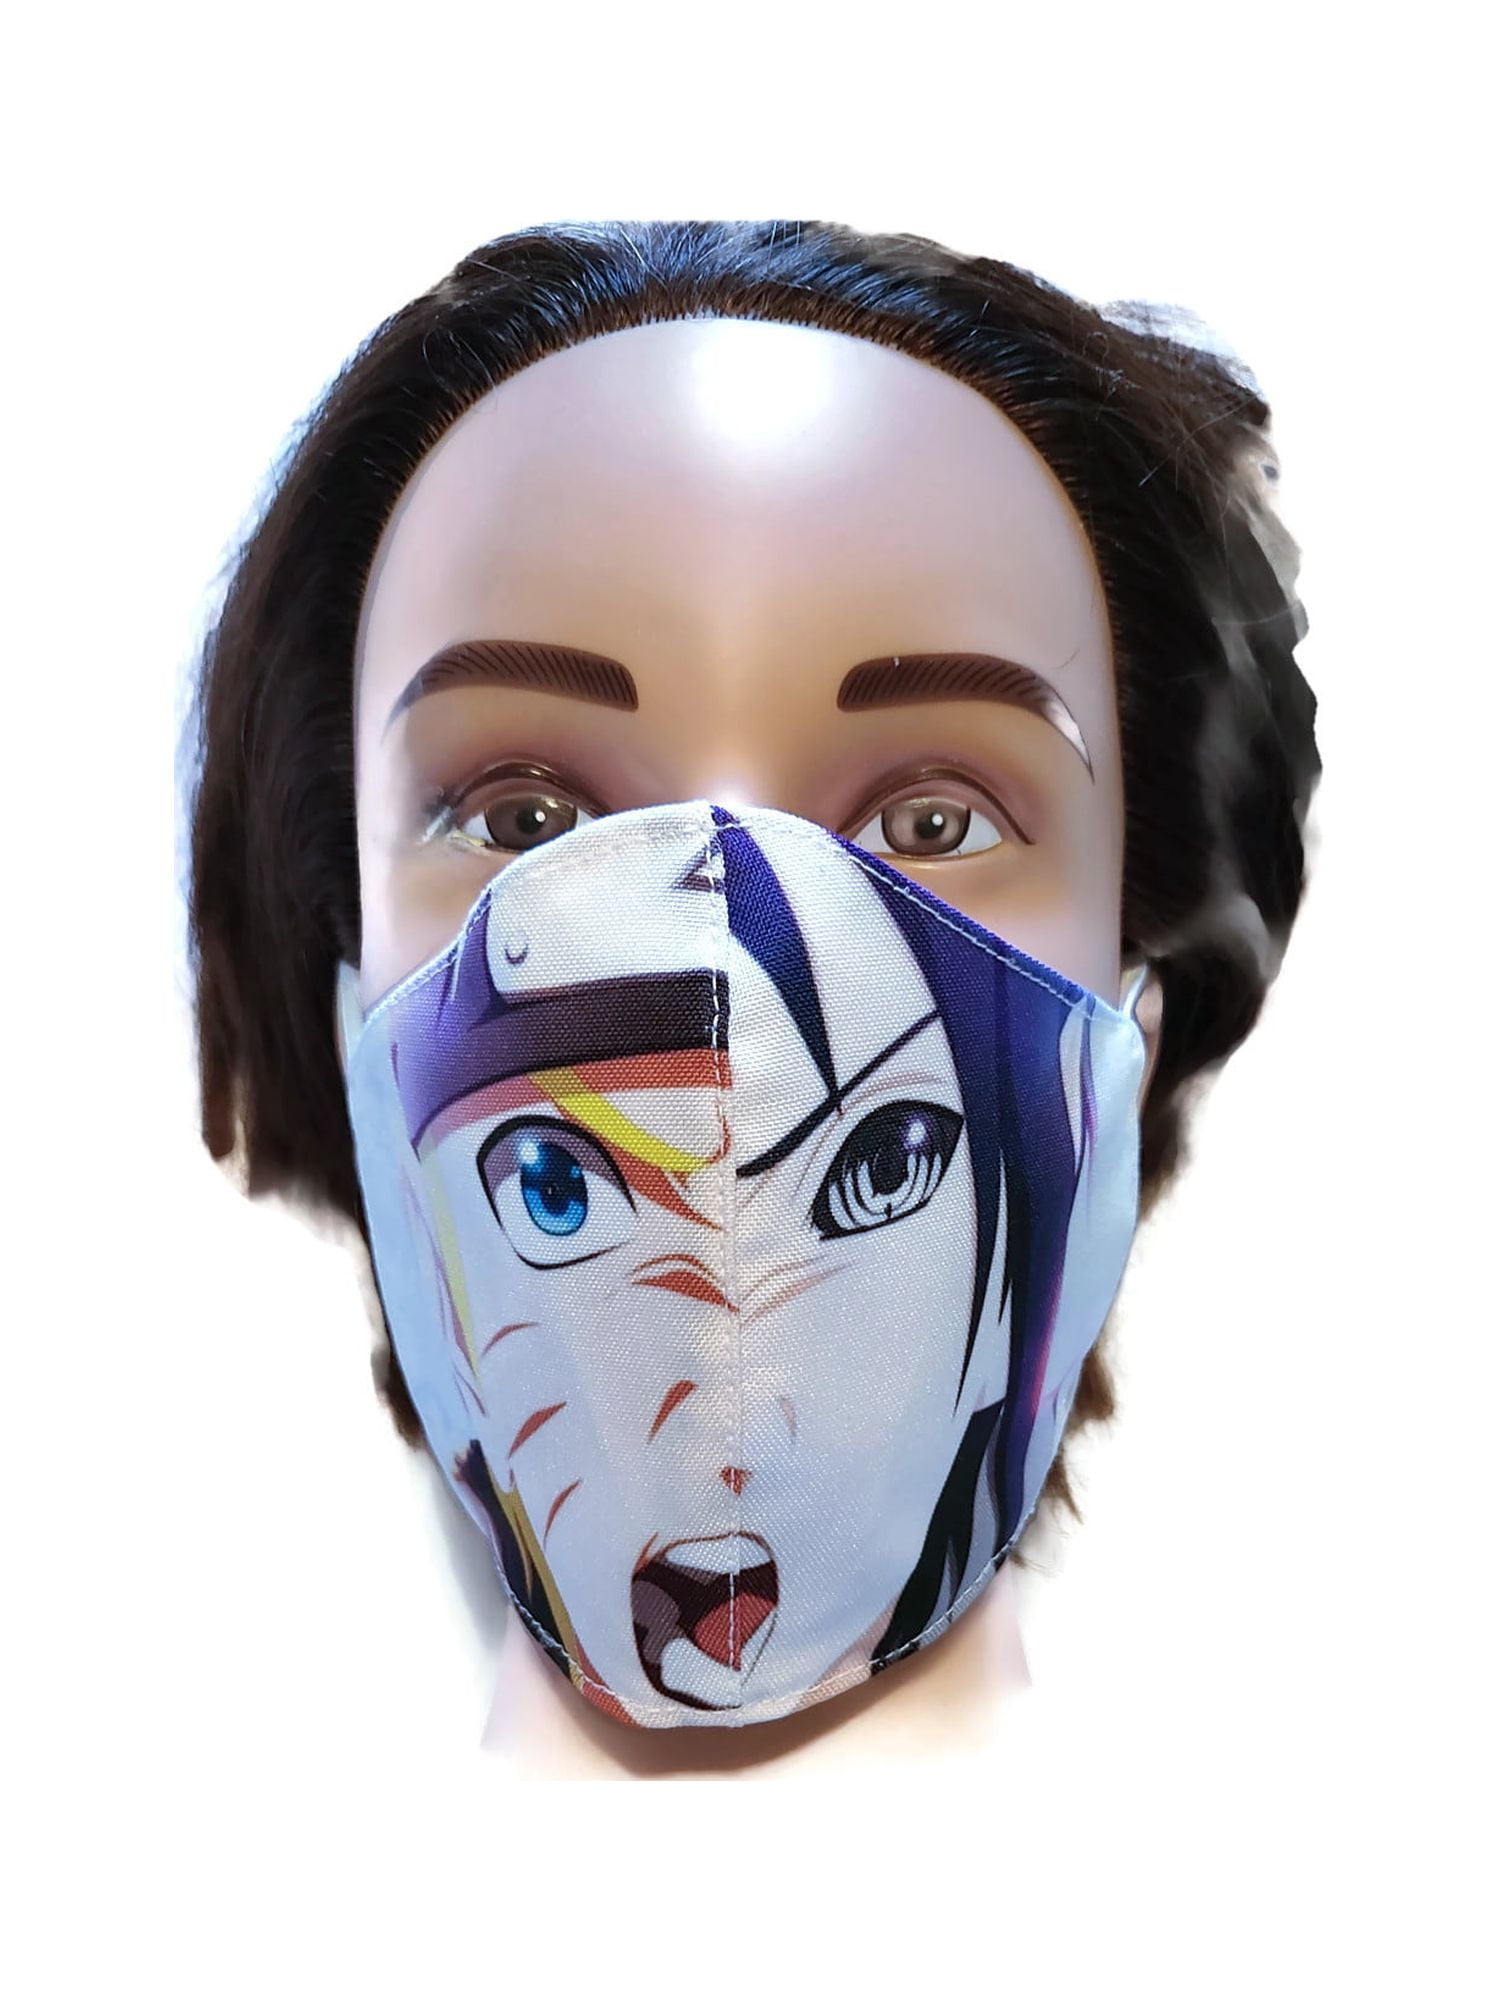 Hatake Kakashi Cloth Face Mask